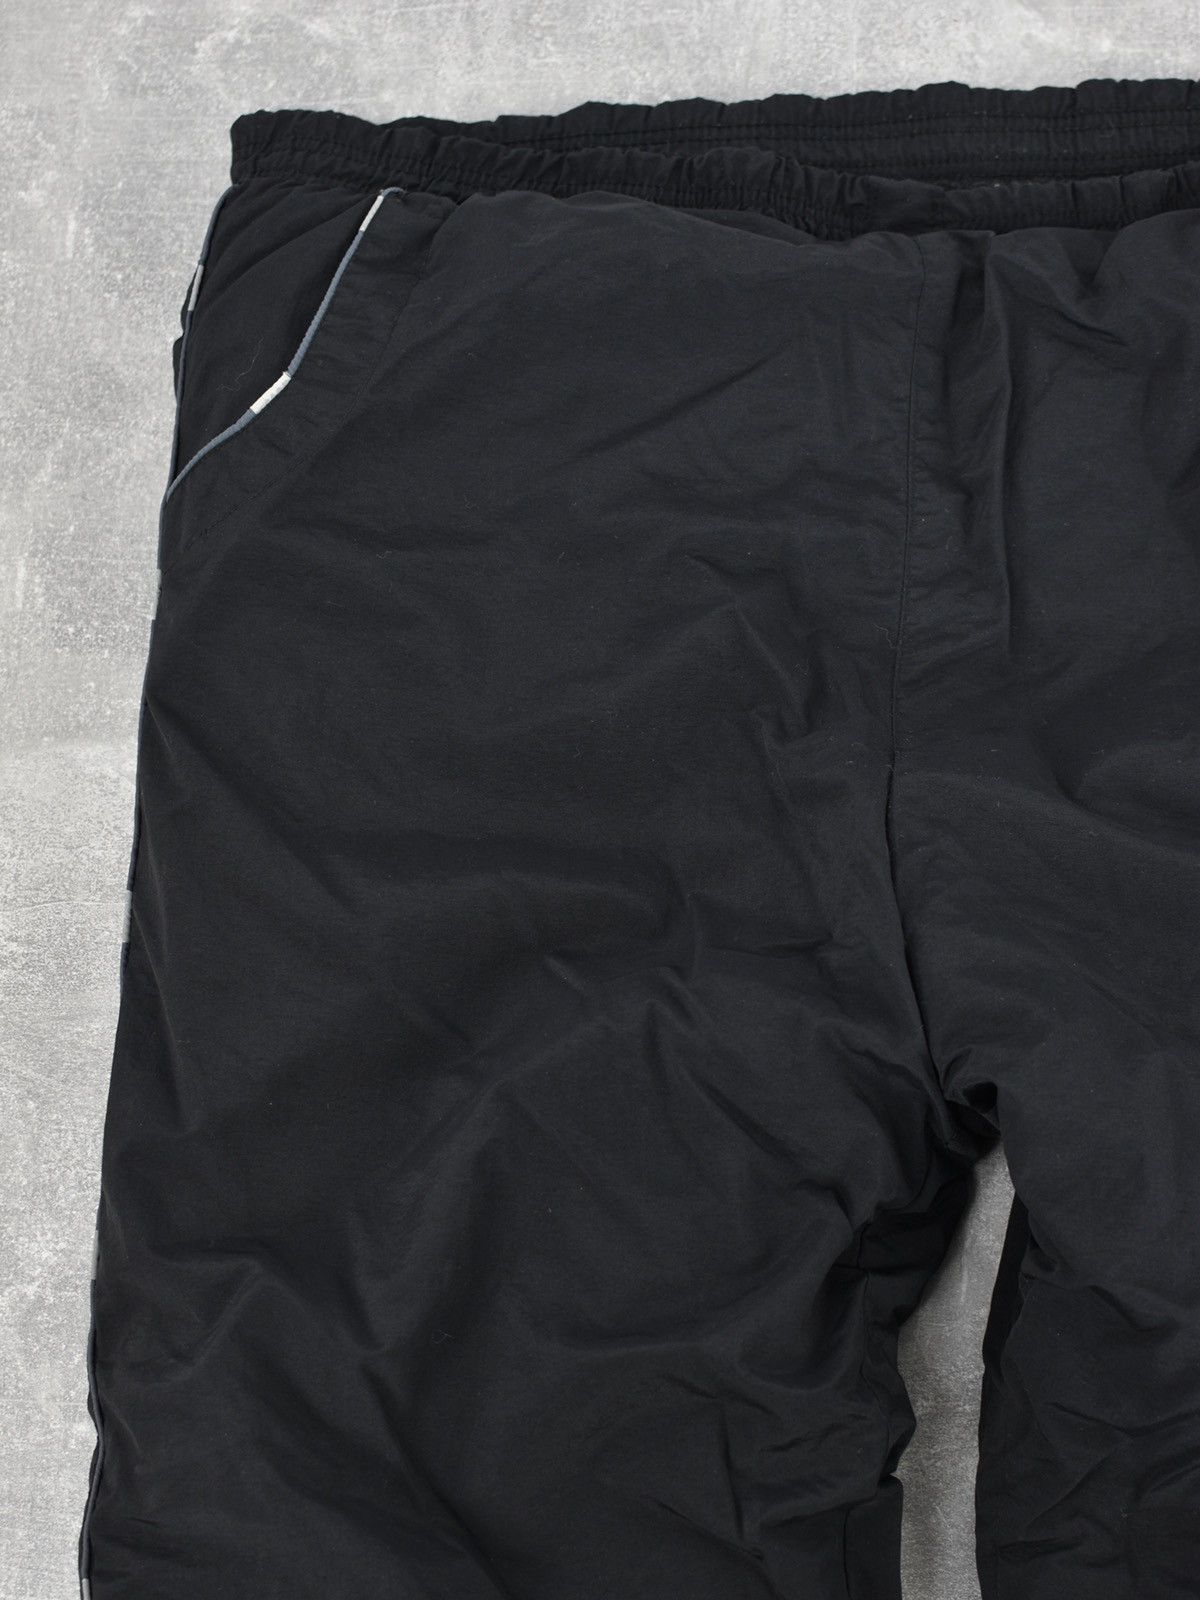 Nike Vintage Nike ACG Fleece Pants Size XL Size US 36 / EU 52 - 4 Thumbnail